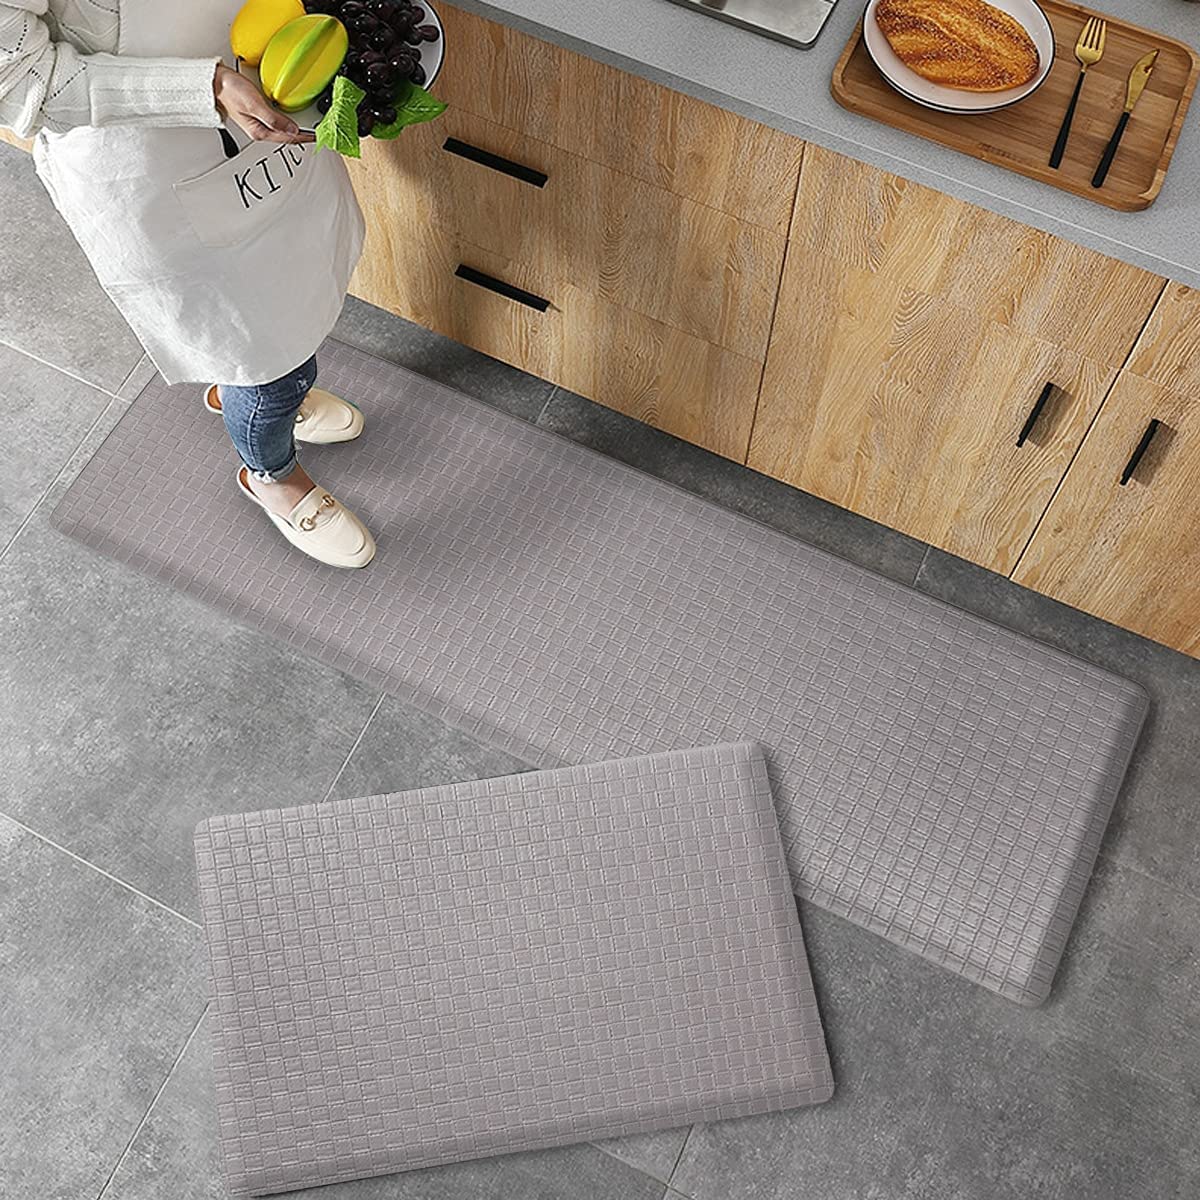 Gel-Soft Anti-Fatigue Kitchen Floor Mats